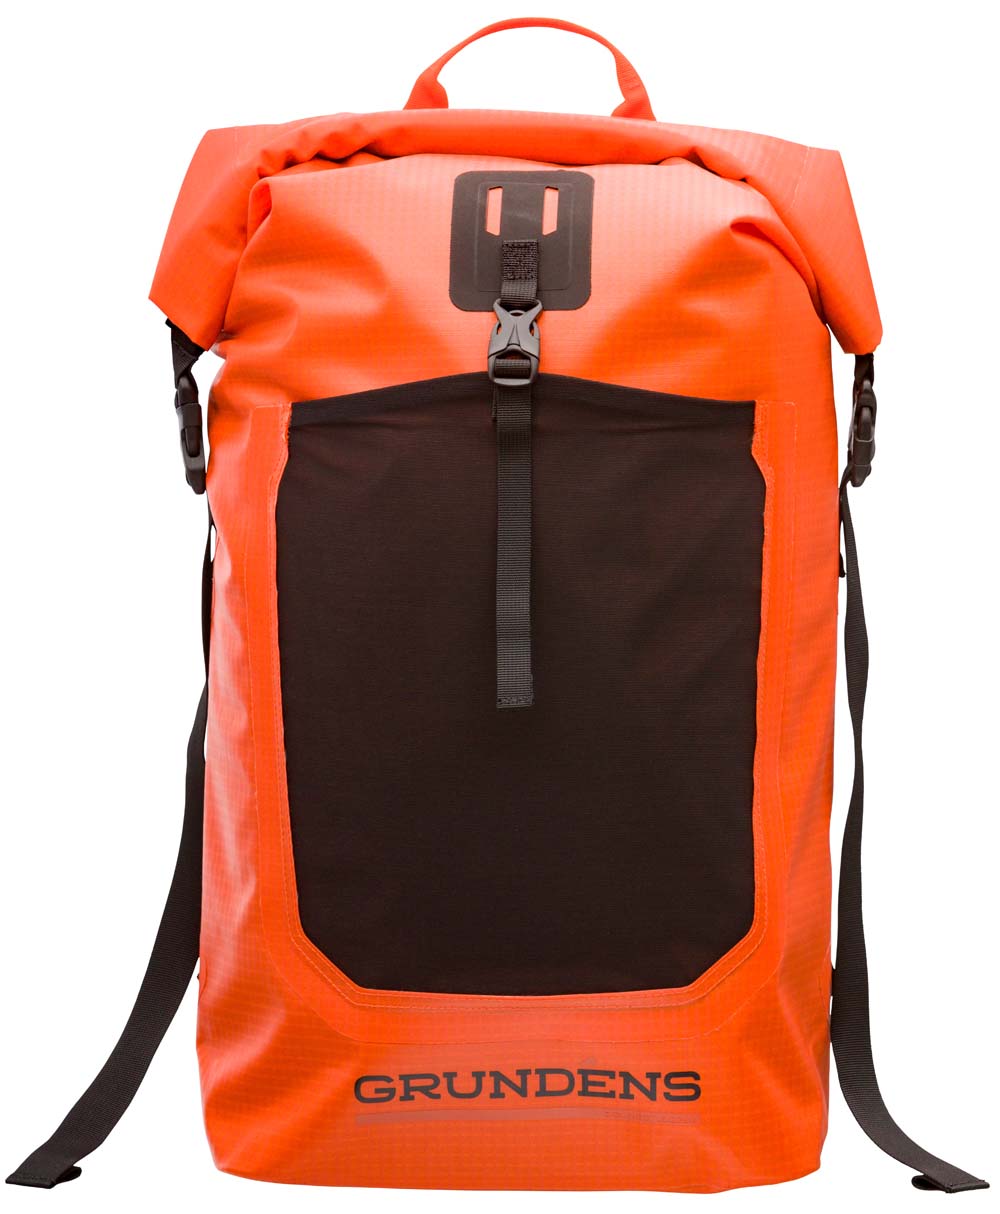 Bootlegger Roll Top Backpack 30L Red Orange